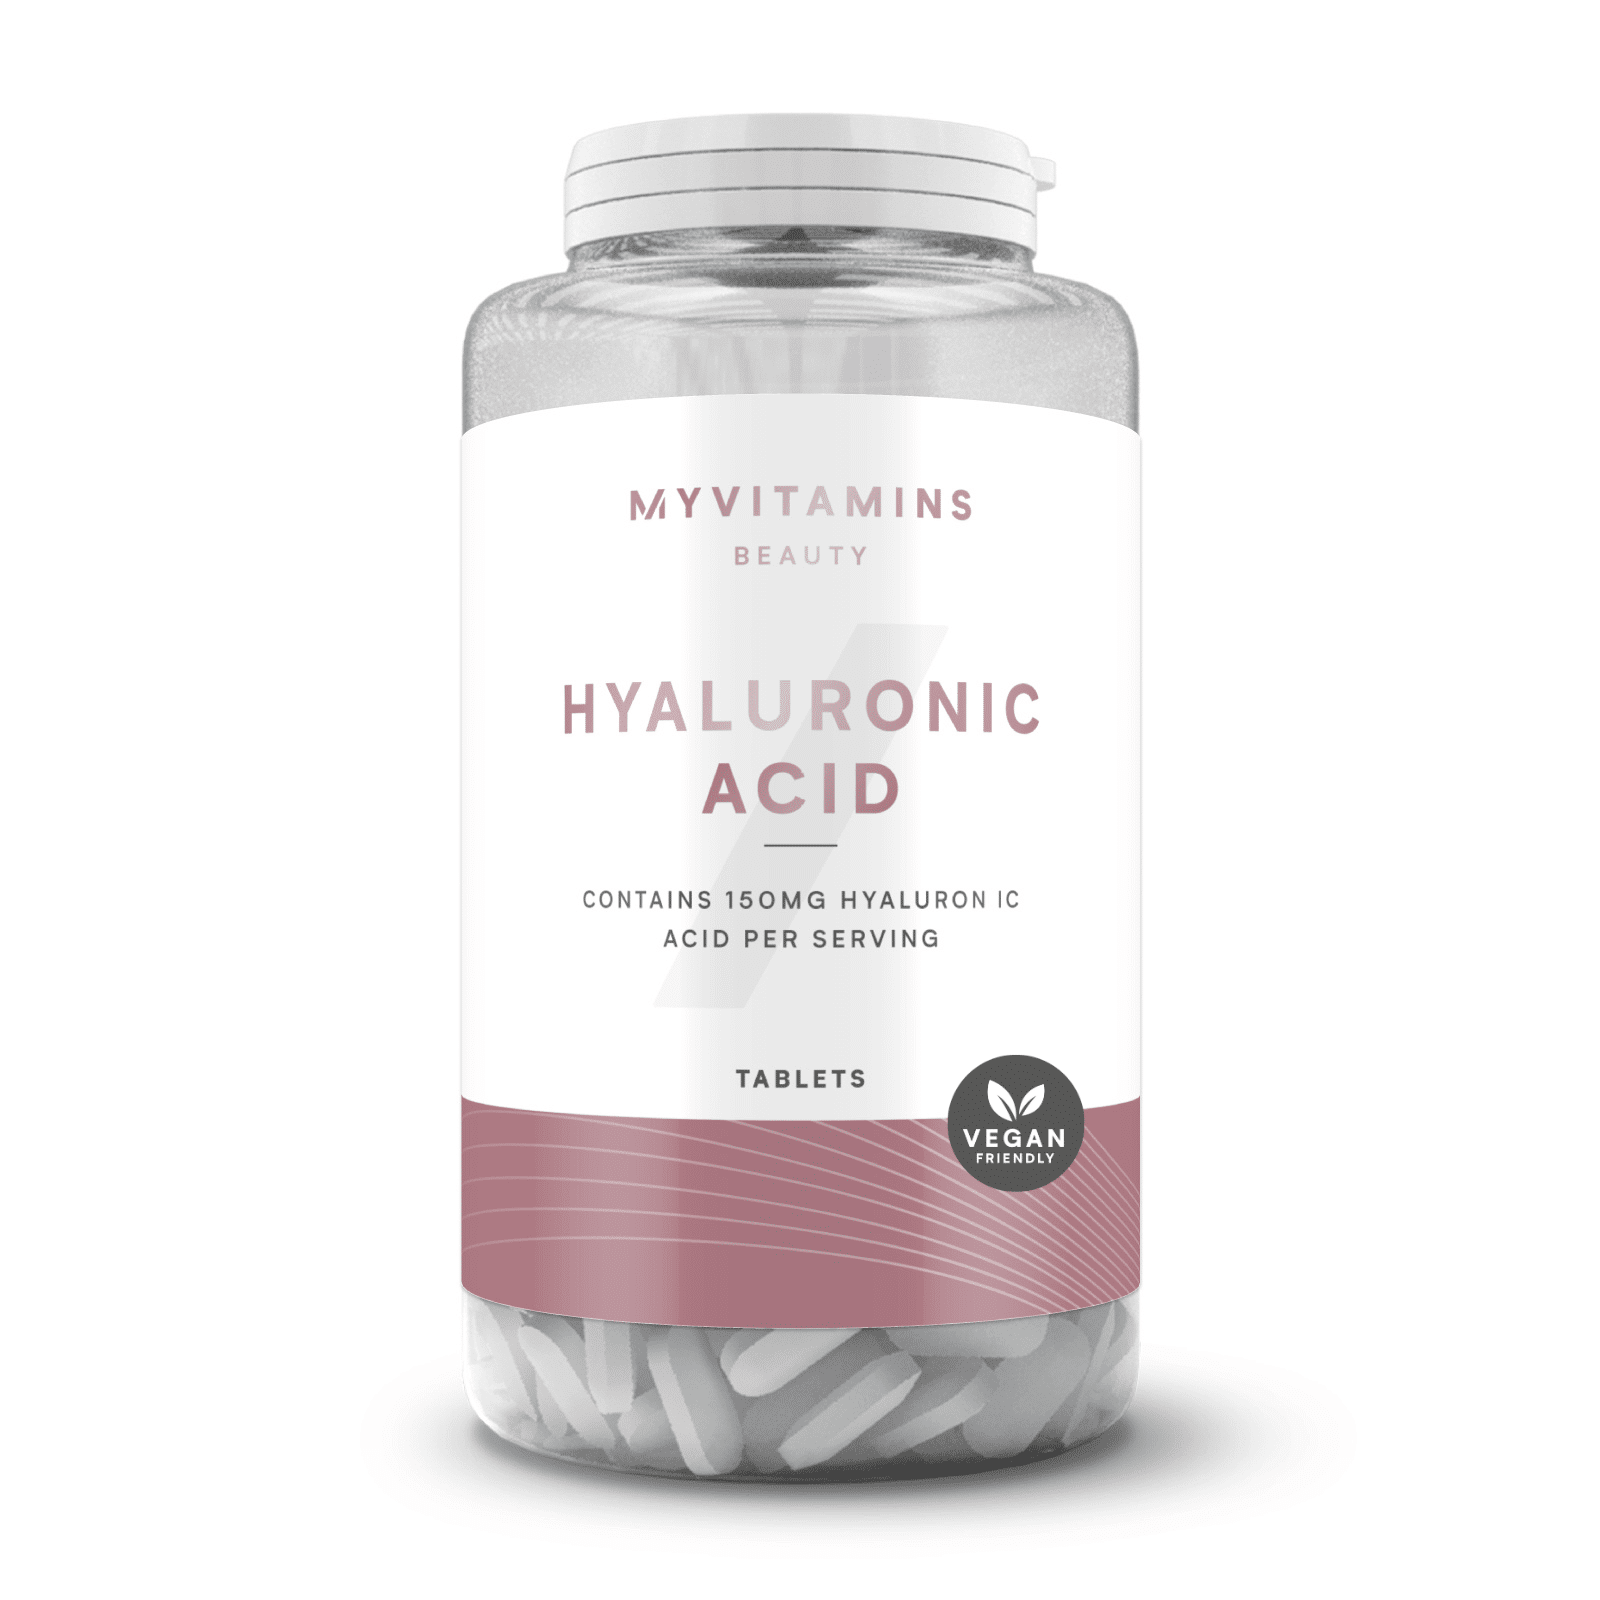 Myvitamins Hyaluronic Acid Tablets - 30Tablets